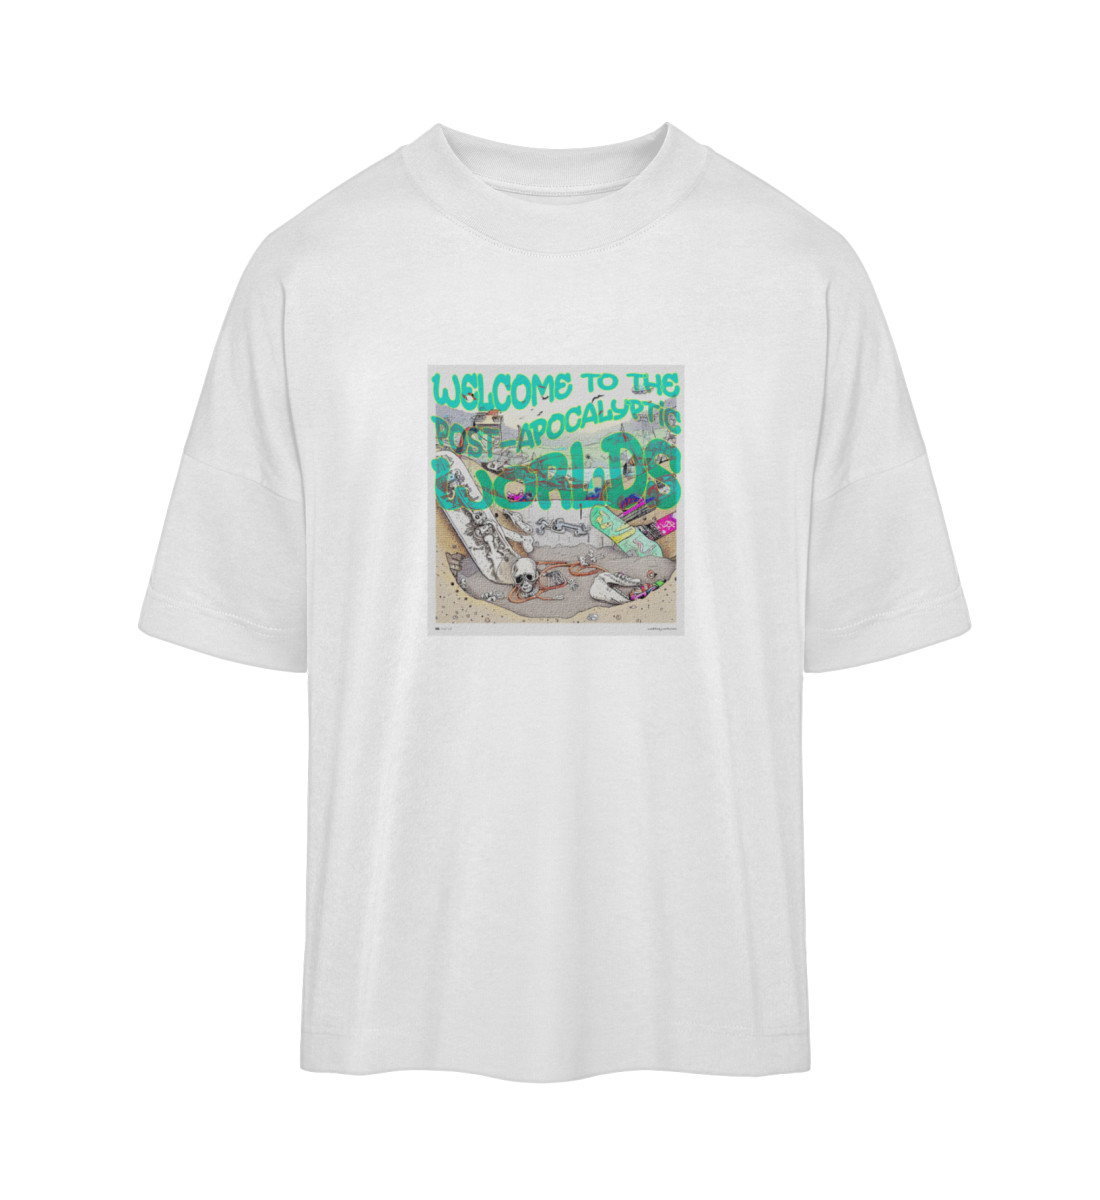 T-shirt Oversize Other Worlds 04 - Organic Oversized Shirt ST/ST-3